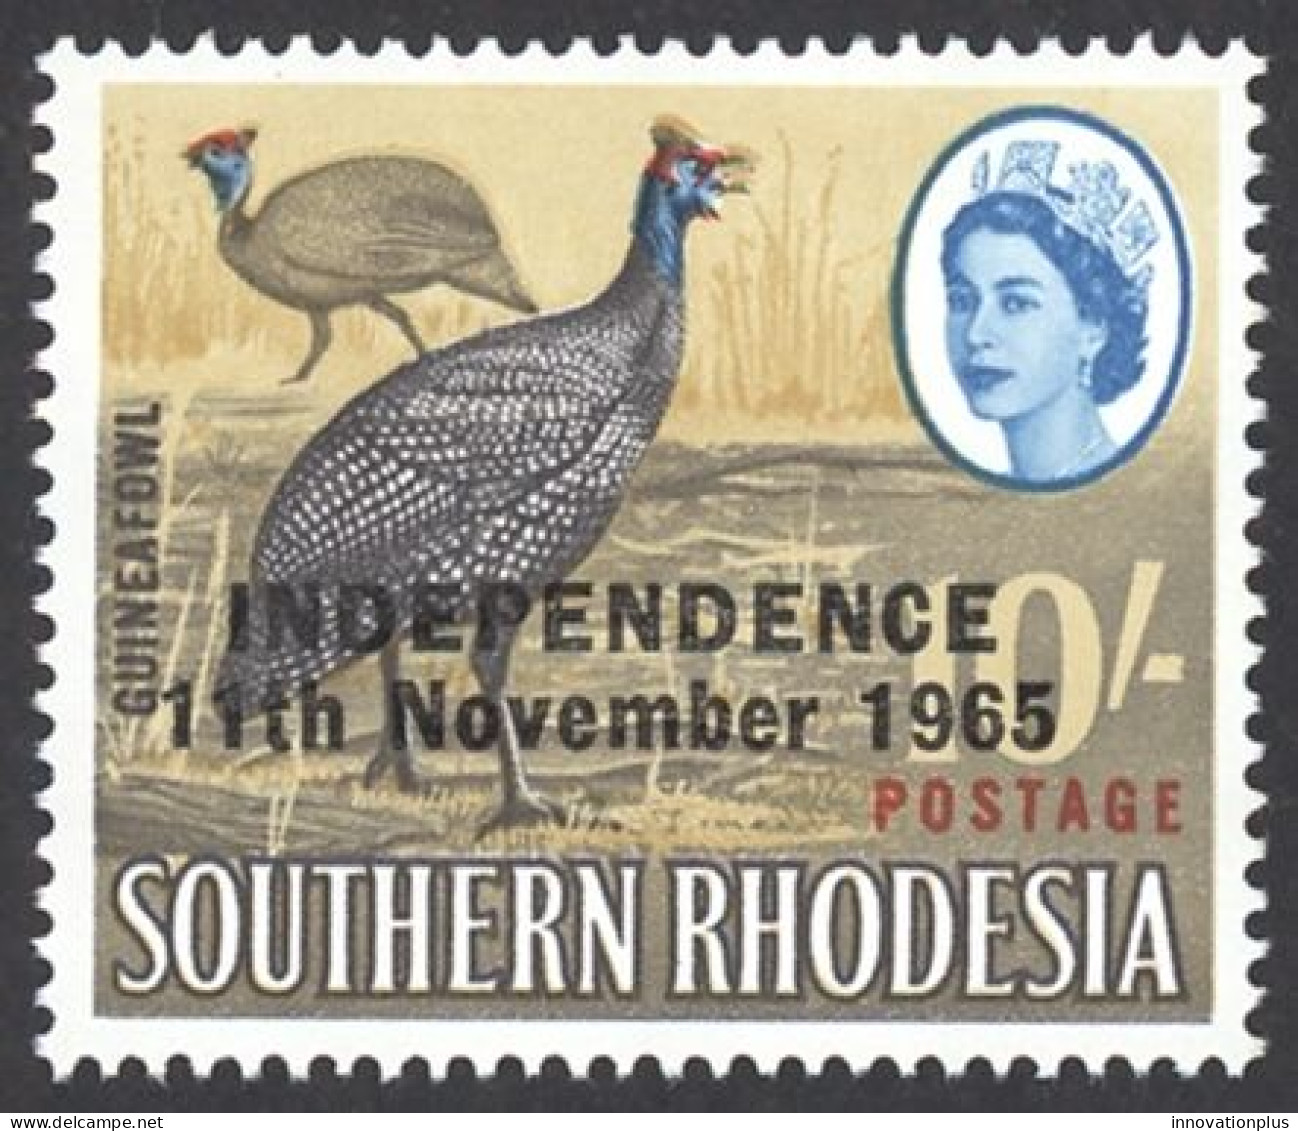 Rhodesia Sc# 220 MNH 1966 10sh Overprint - Rhodesia (1964-1980)